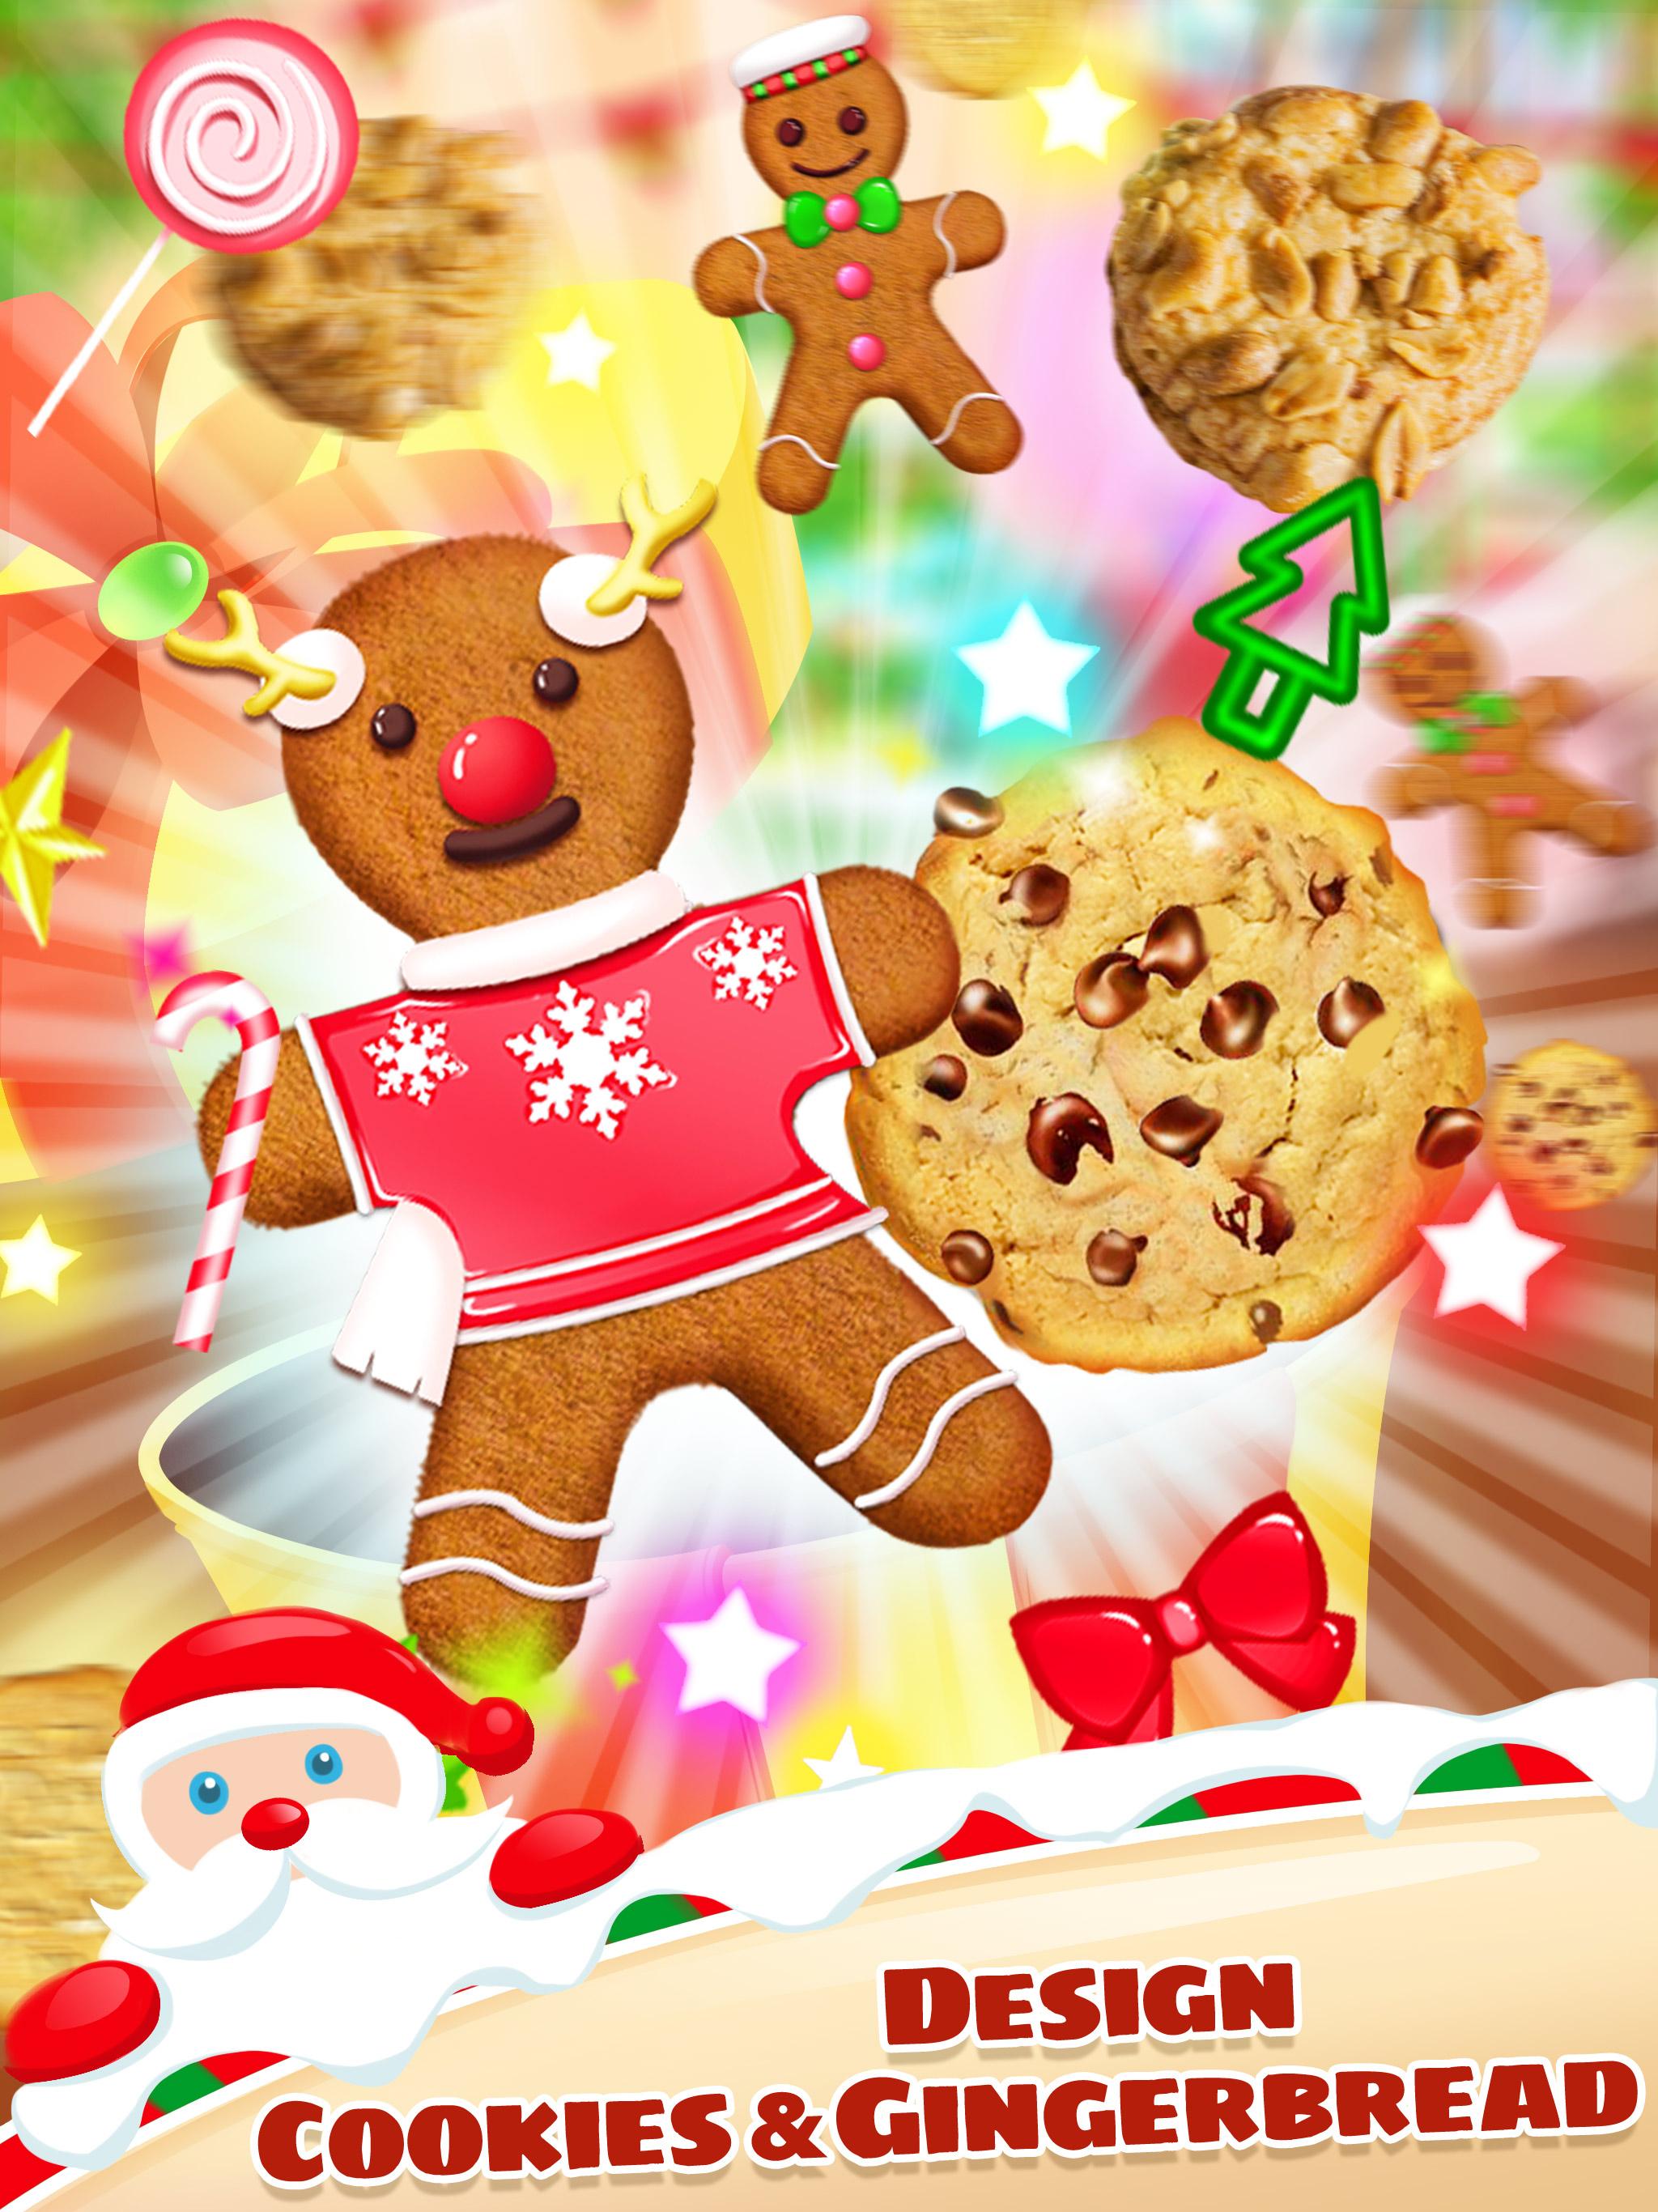 Christmas Cookies Party - Sweet Desserts 1.0 Screenshot 12